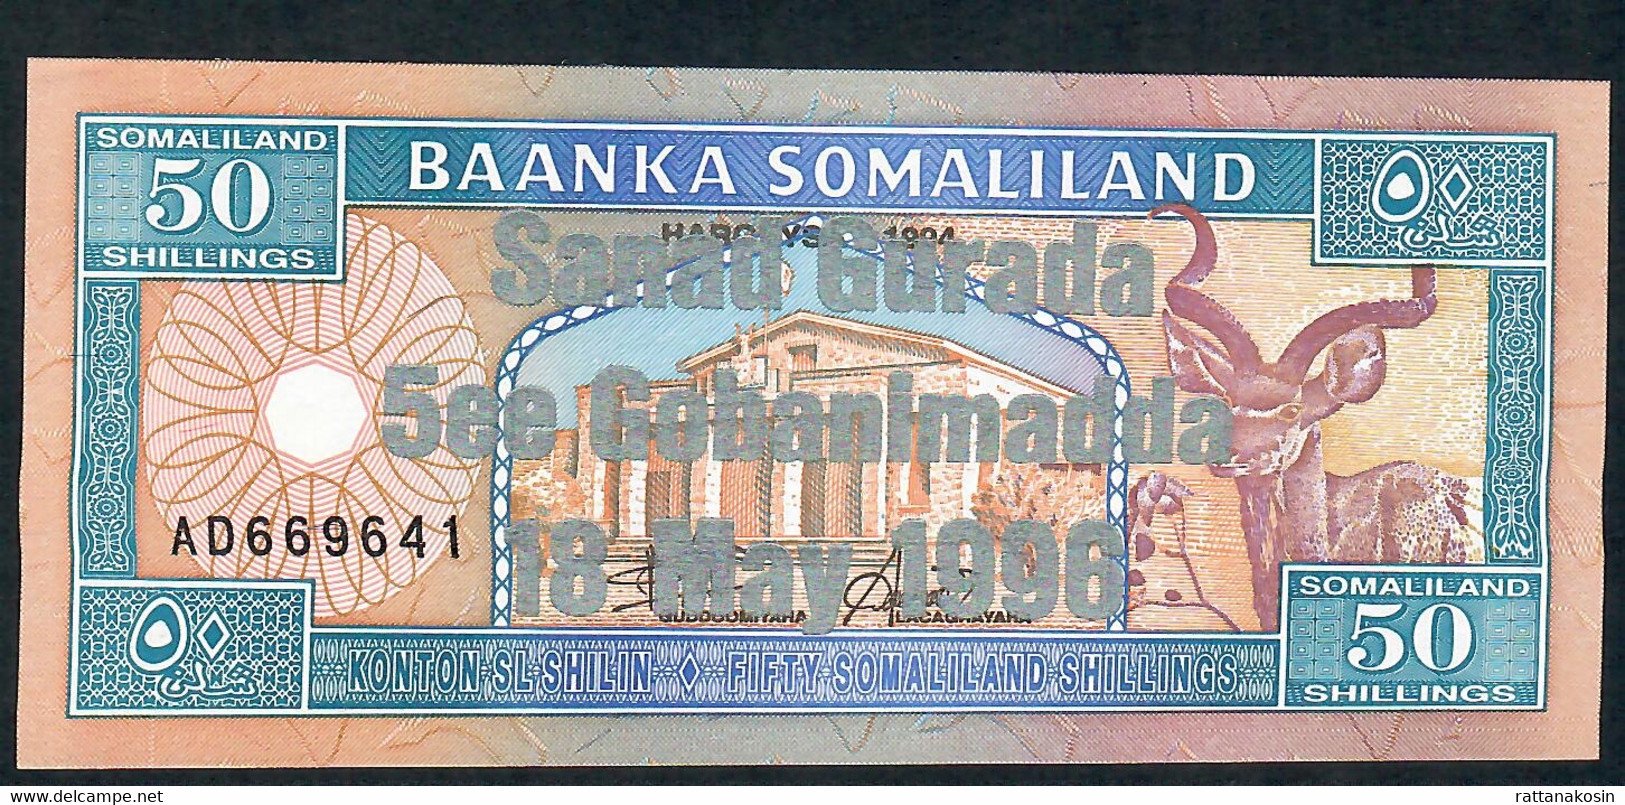 SOMALILAND  P17a 50  SHILLINGS 1996  #AD  Overprint 4a    RARE     UNC. - Somalia